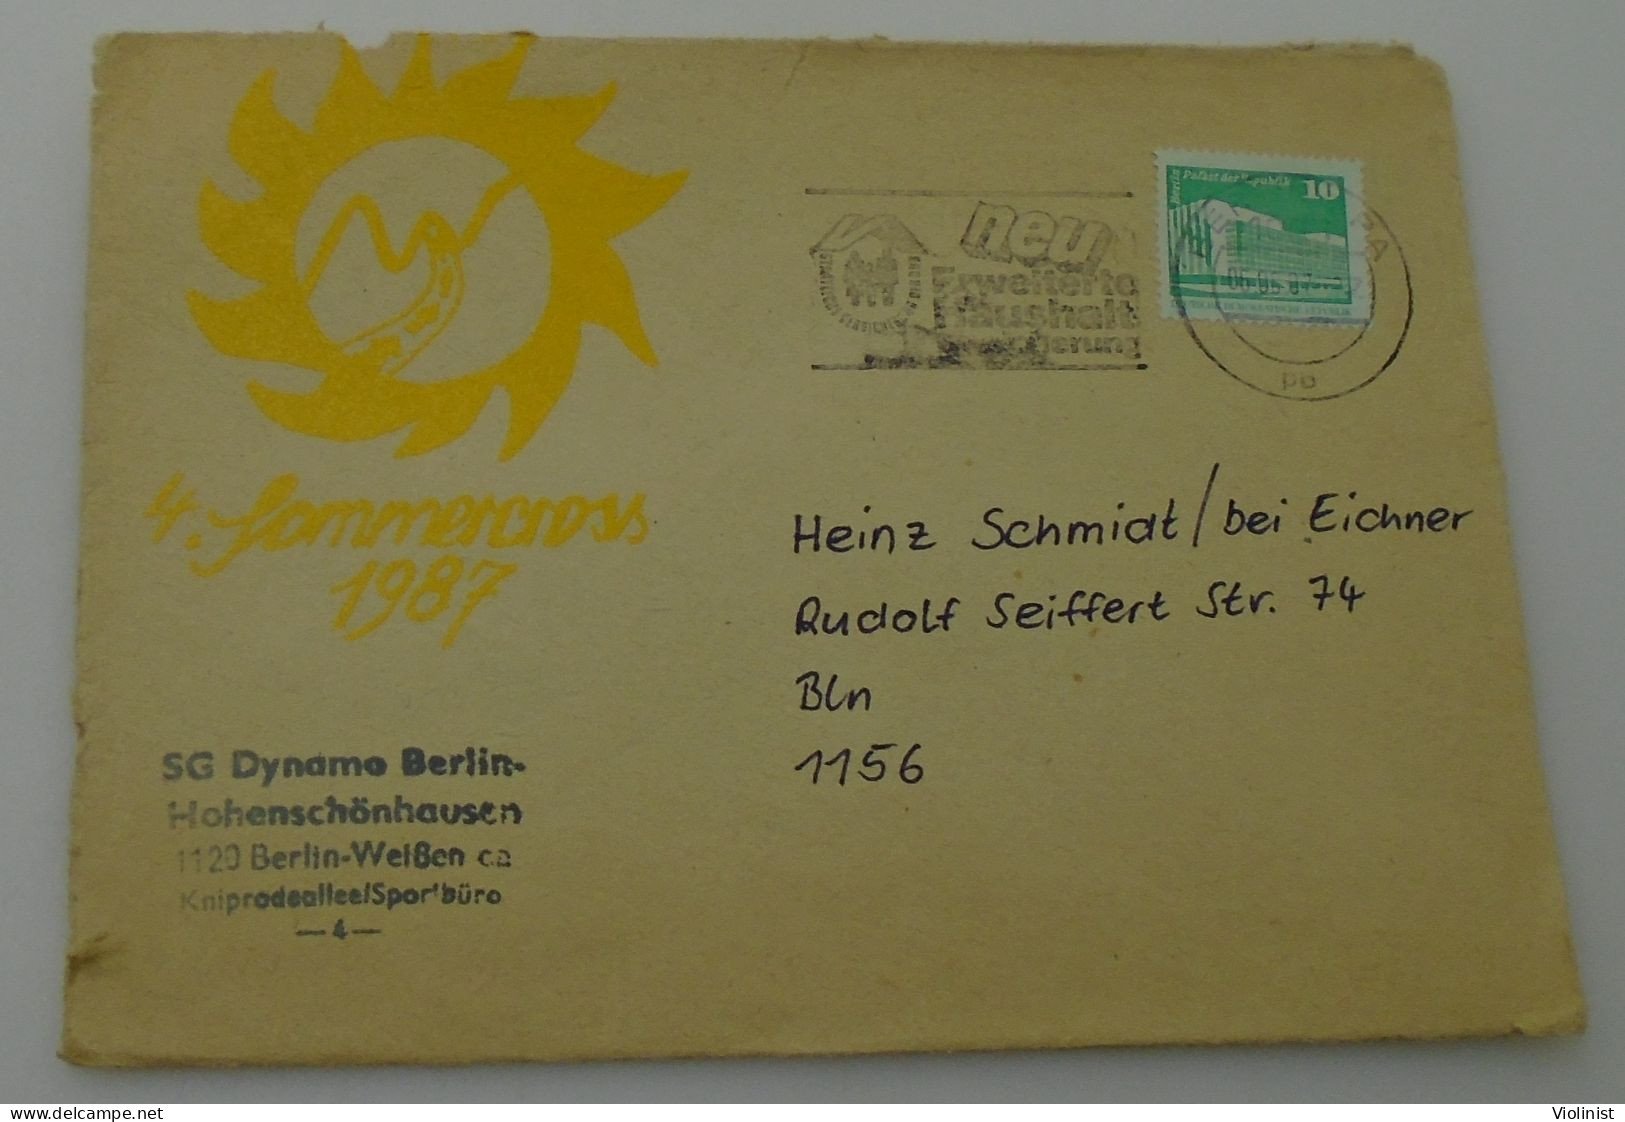 Germany-SG Dynamo Berlin-4.Sommercross 1987. - Enveloppes Privées - Oblitérées